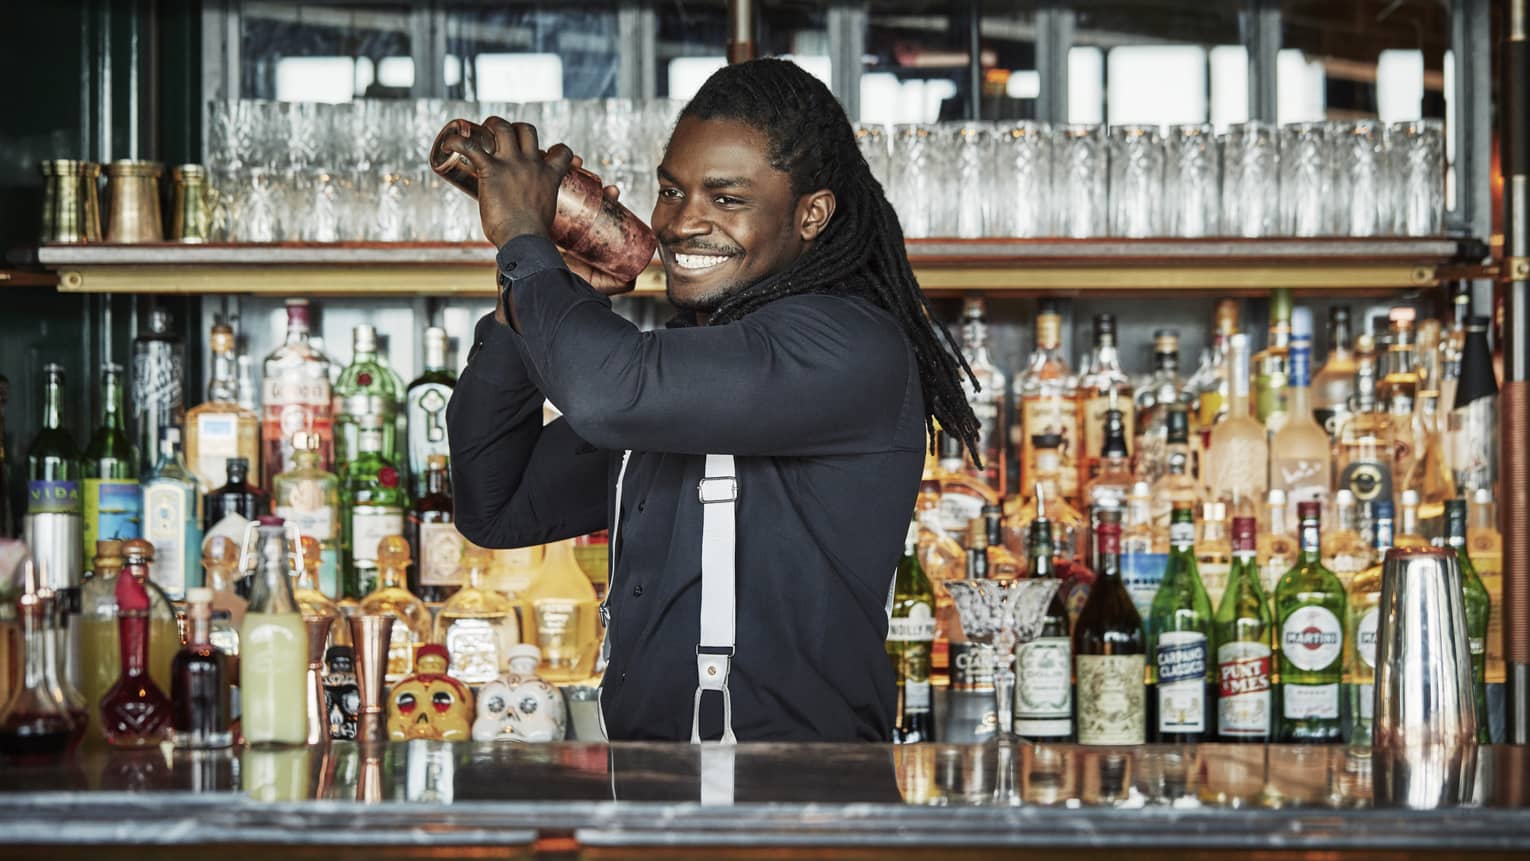 Smiling Butcher & Still bartender shakes cocktail behind bar, liquor display